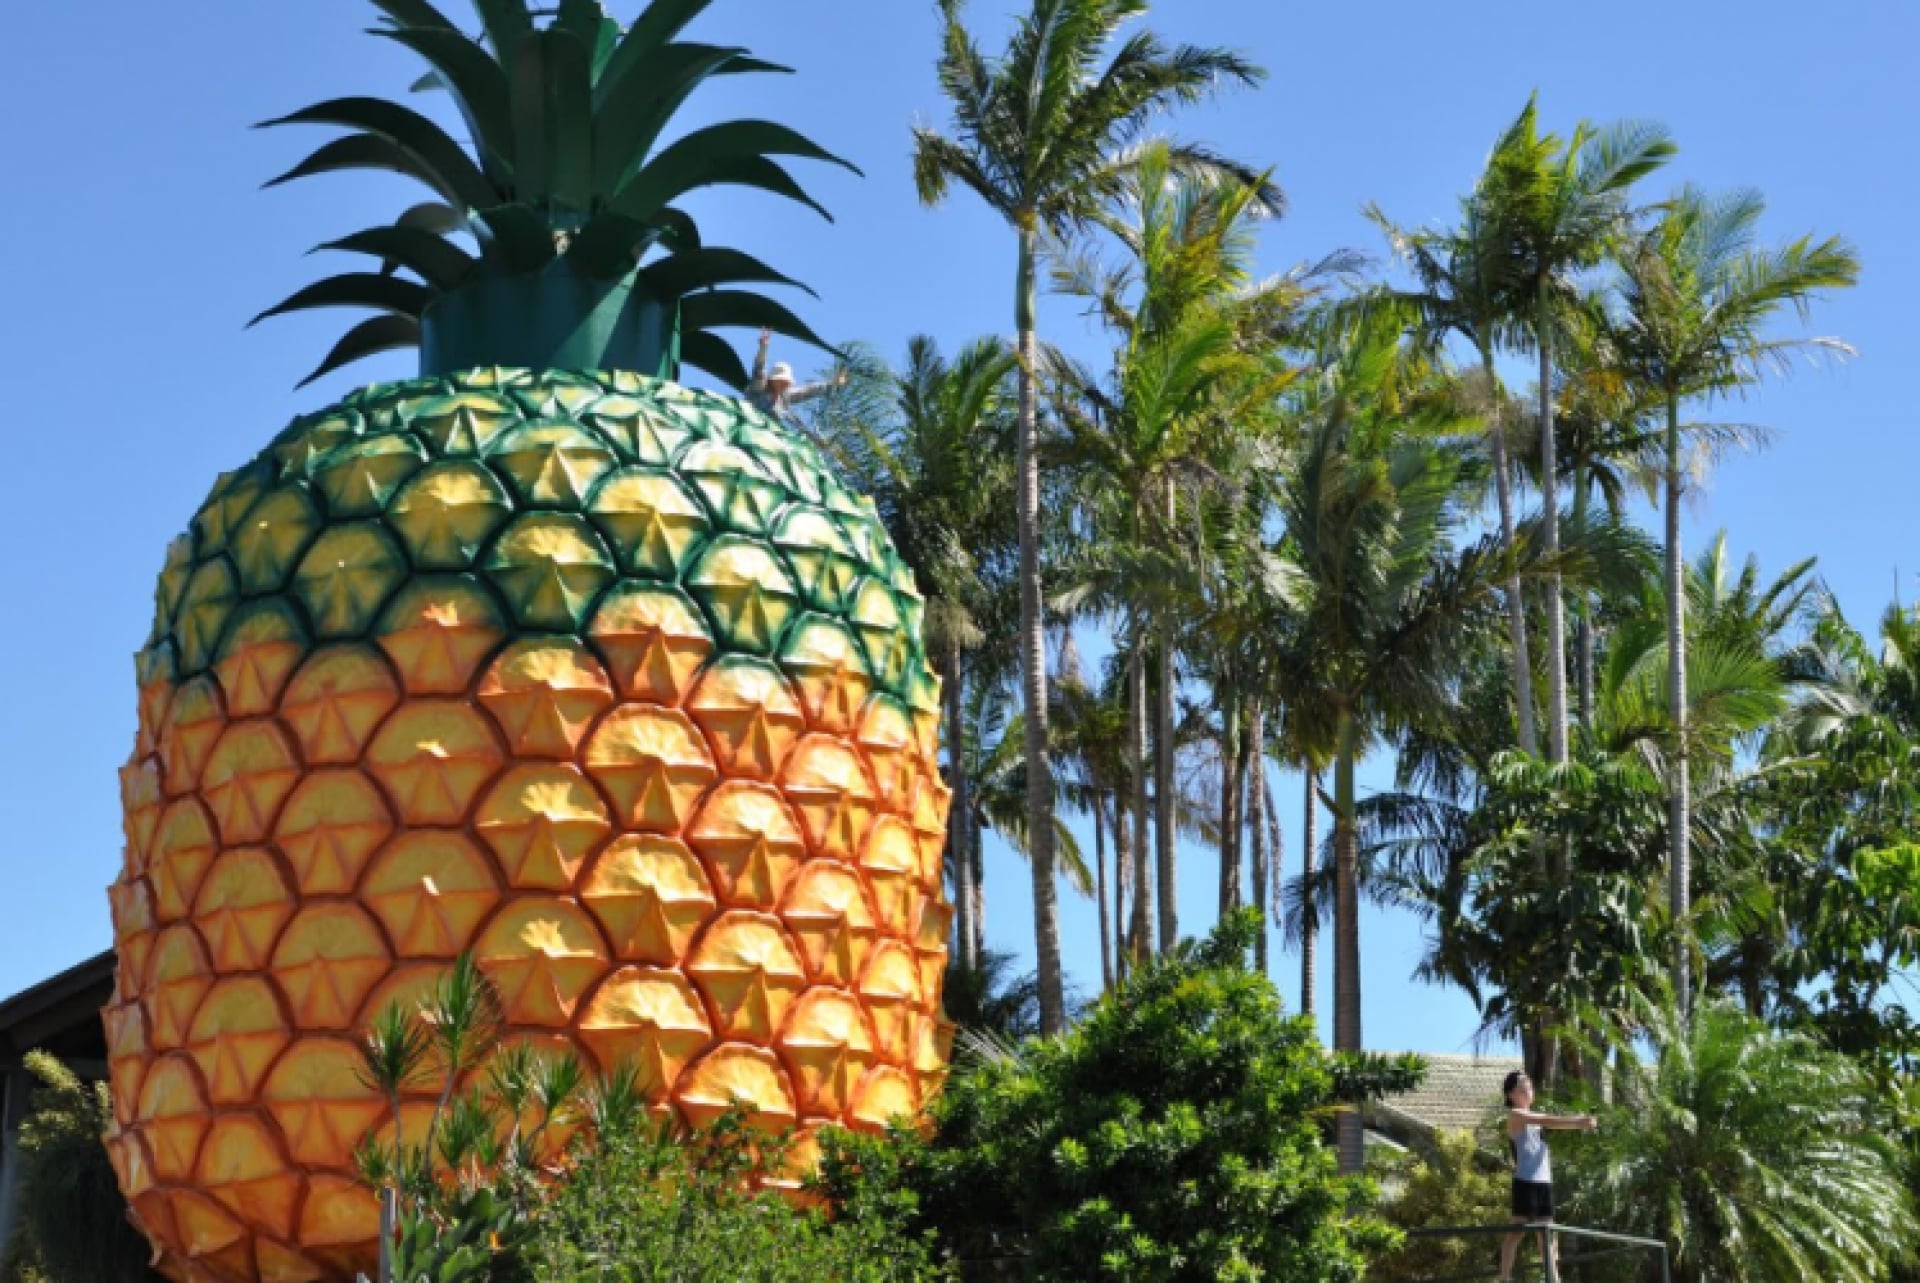 Big Pineapple, Woombye, Sunshine Coast, Queensland © Visit Sunshine Coast